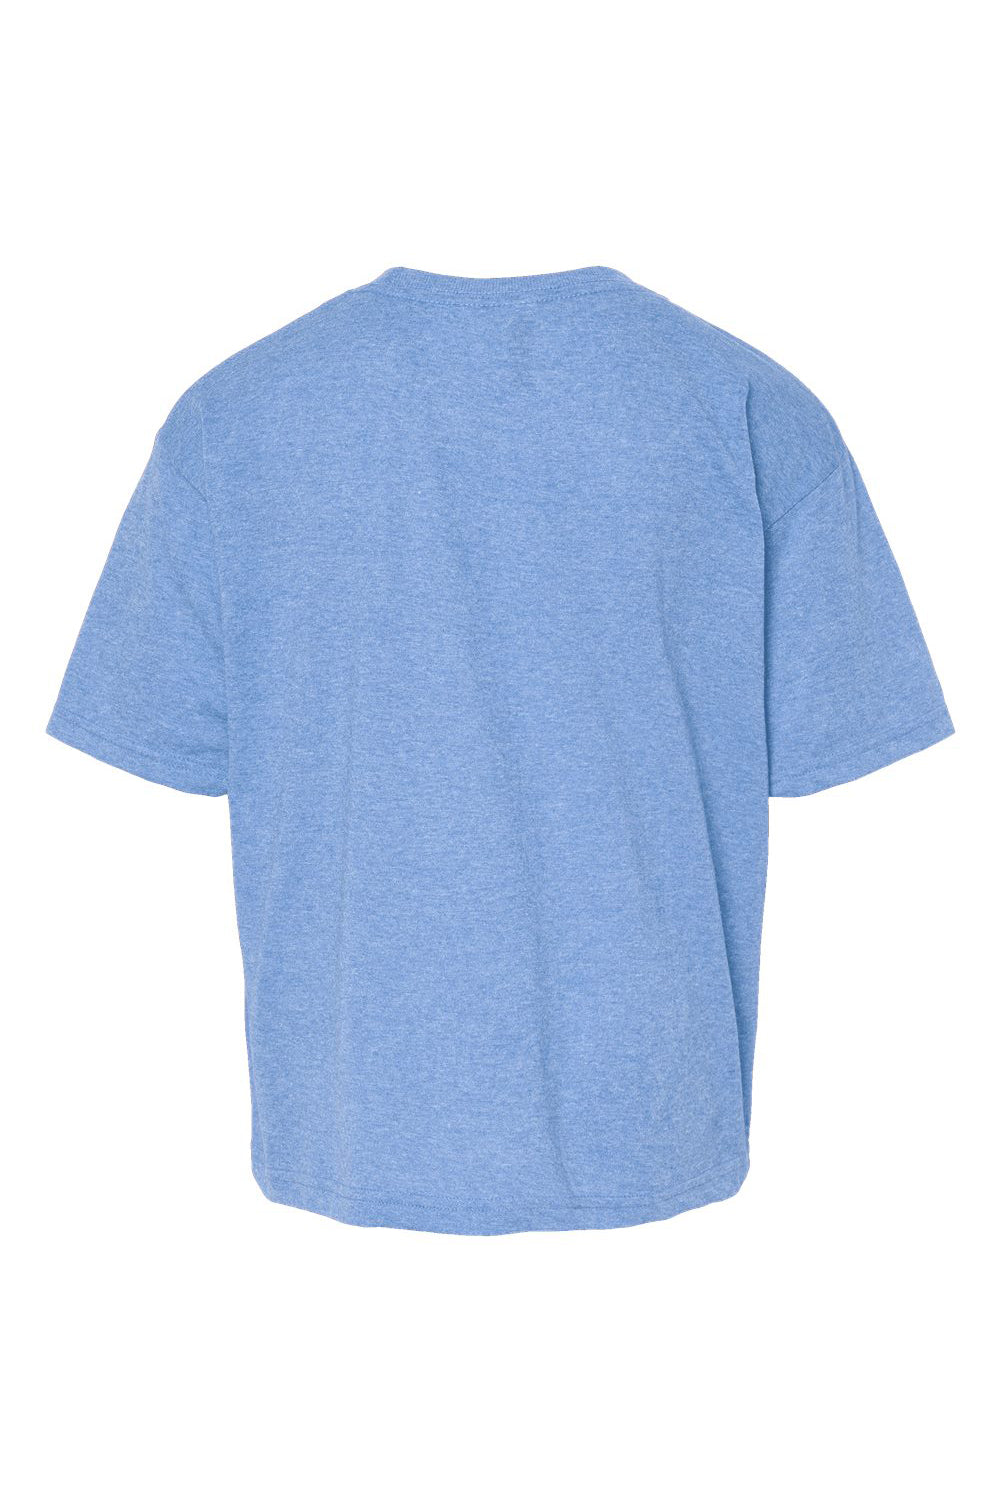 M&O 4850 Youth Gold Soft Touch Short Sleeve Crewneck T-Shirt Heather Light Blue Flat Back